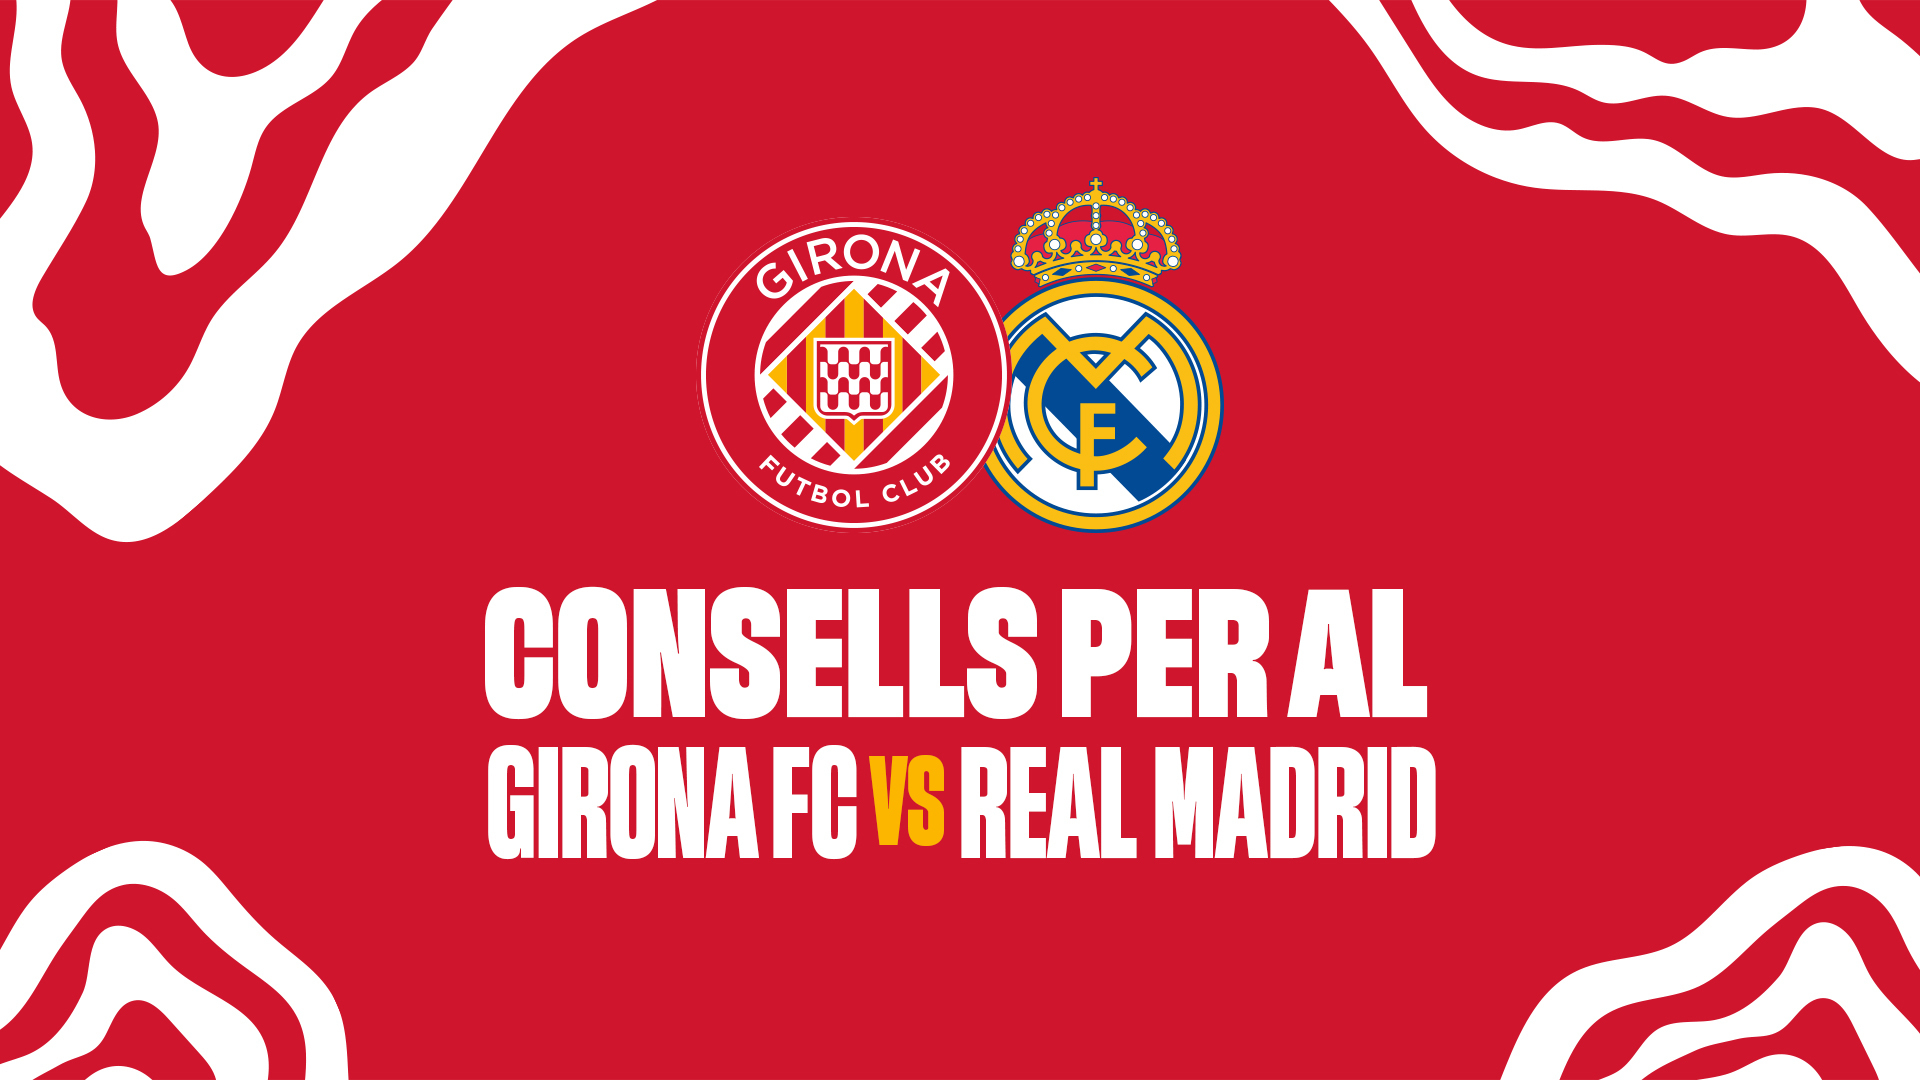 Consells per al Girona vs Real Madrid